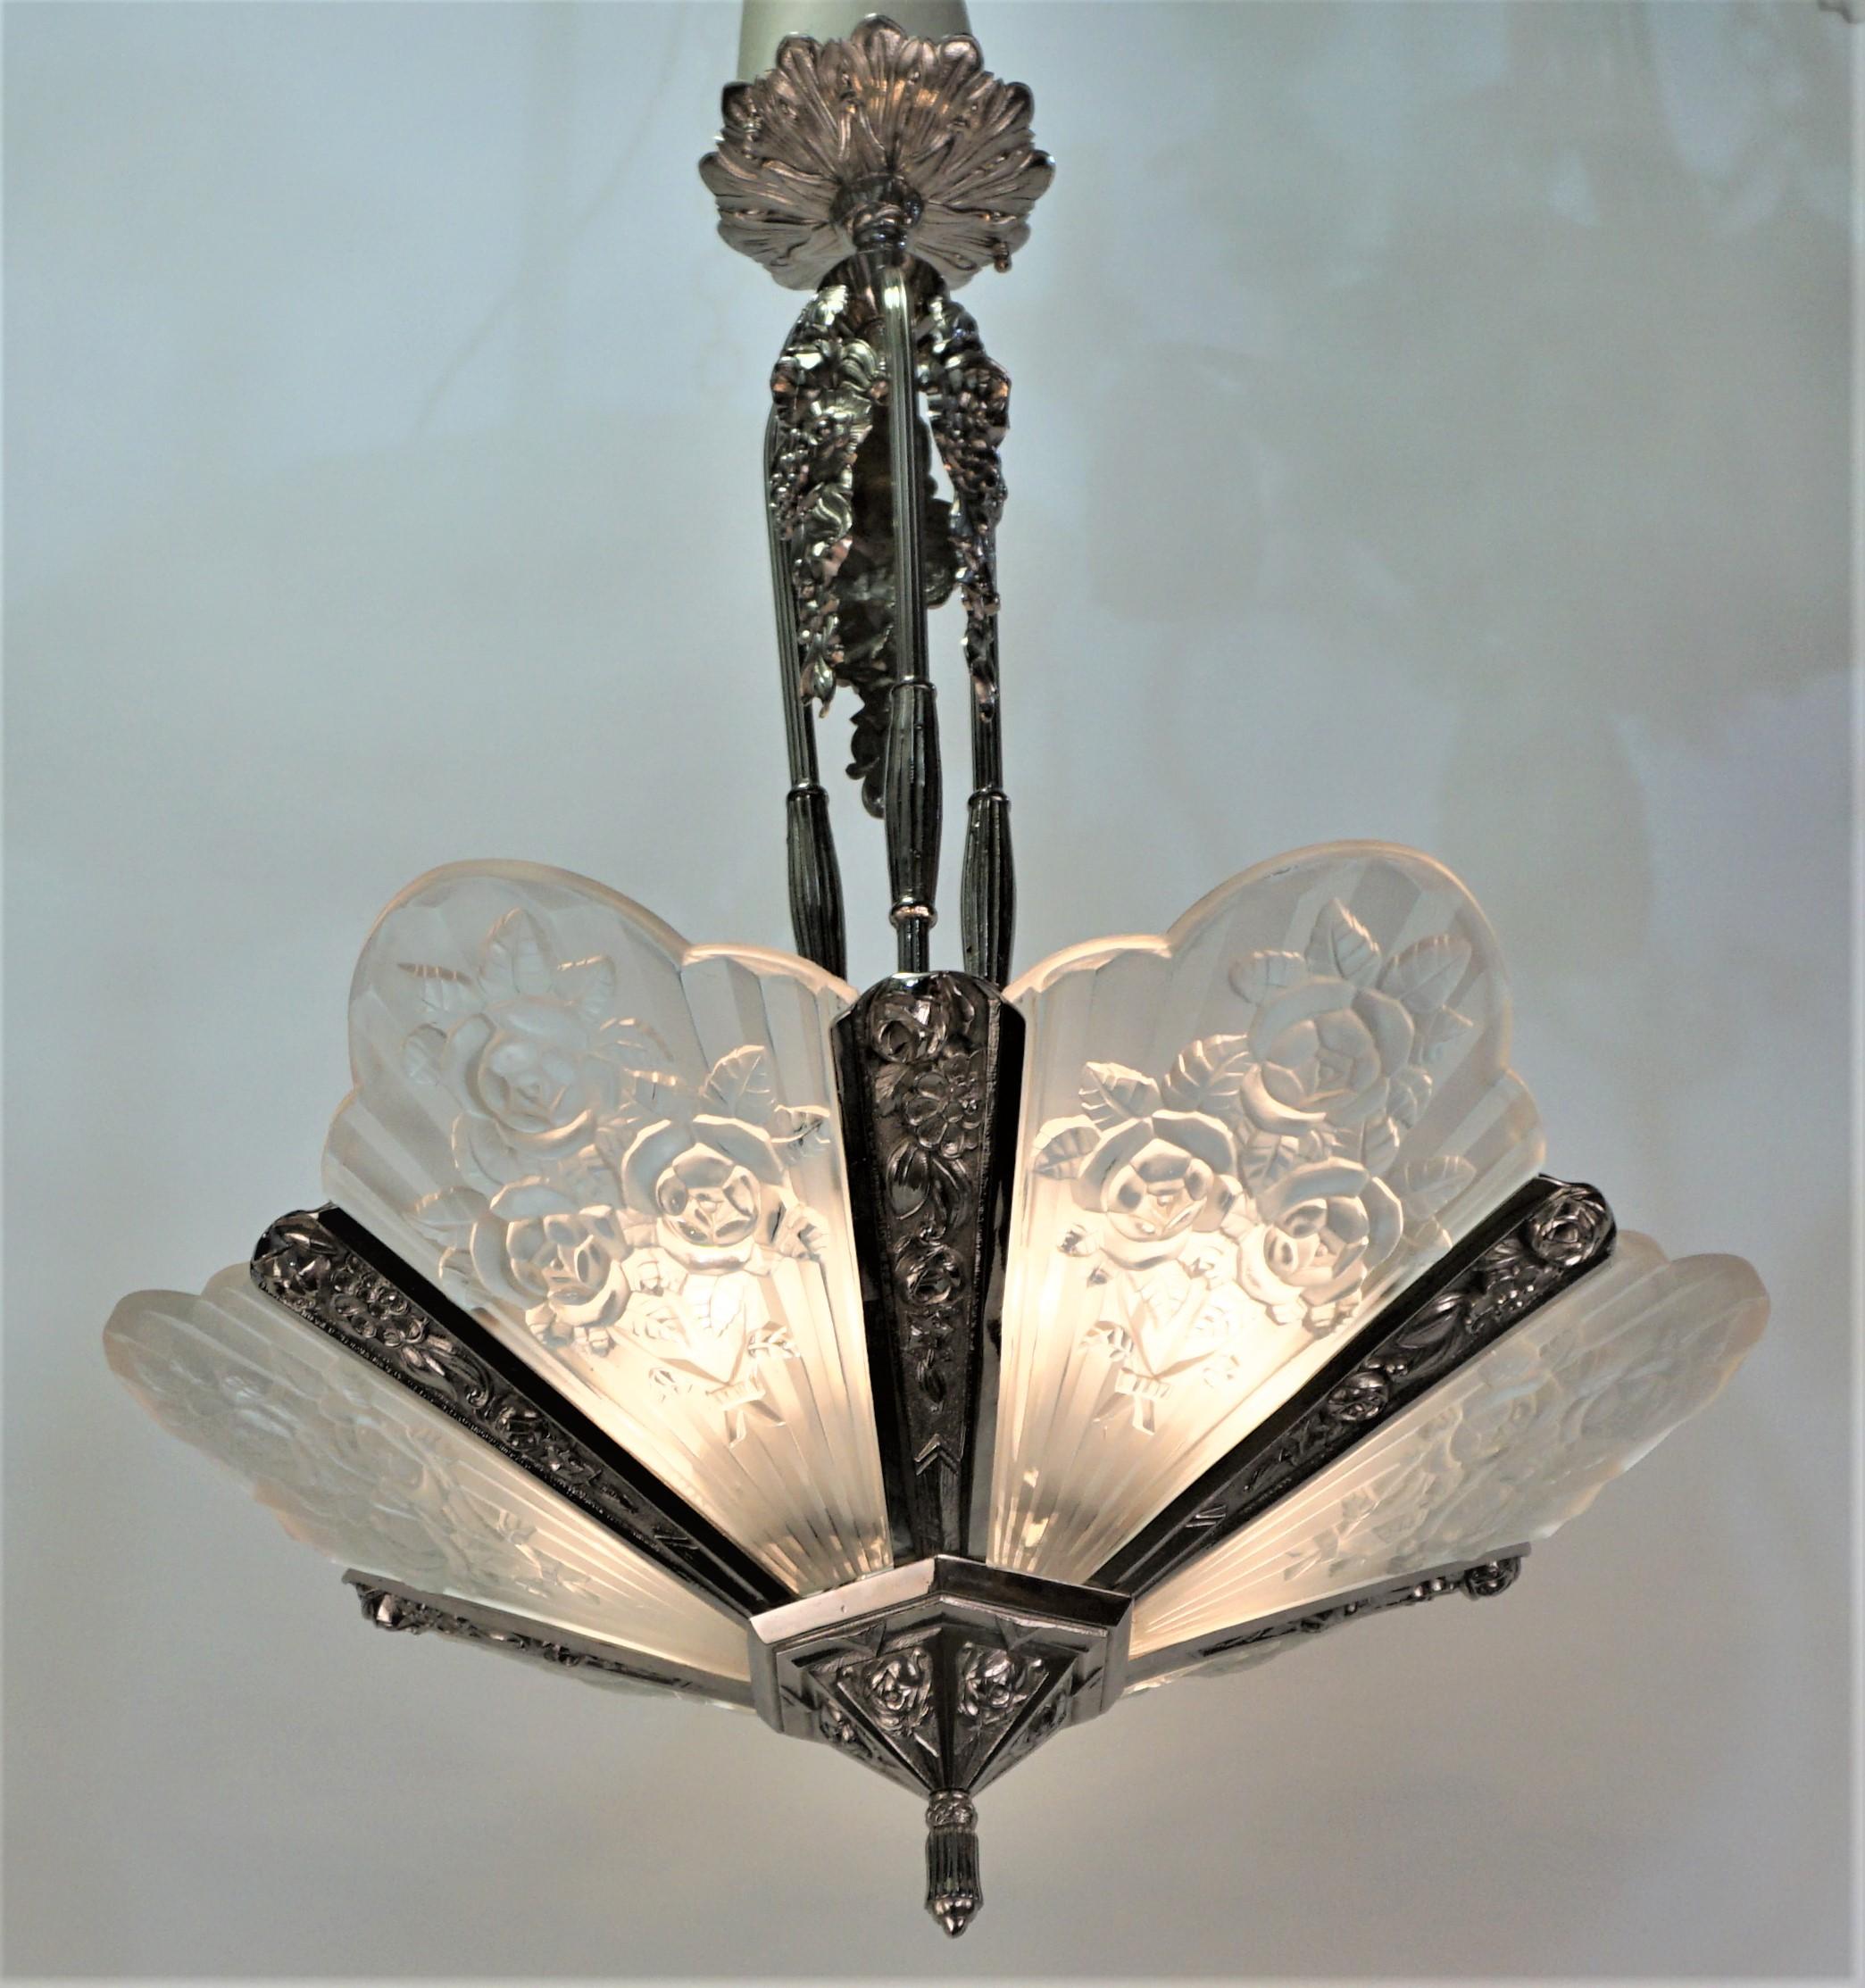 Clear Frost glass polished nickel on bronze 1930s Art Deco chandeliers.
Twelve lights 60 watt max each.